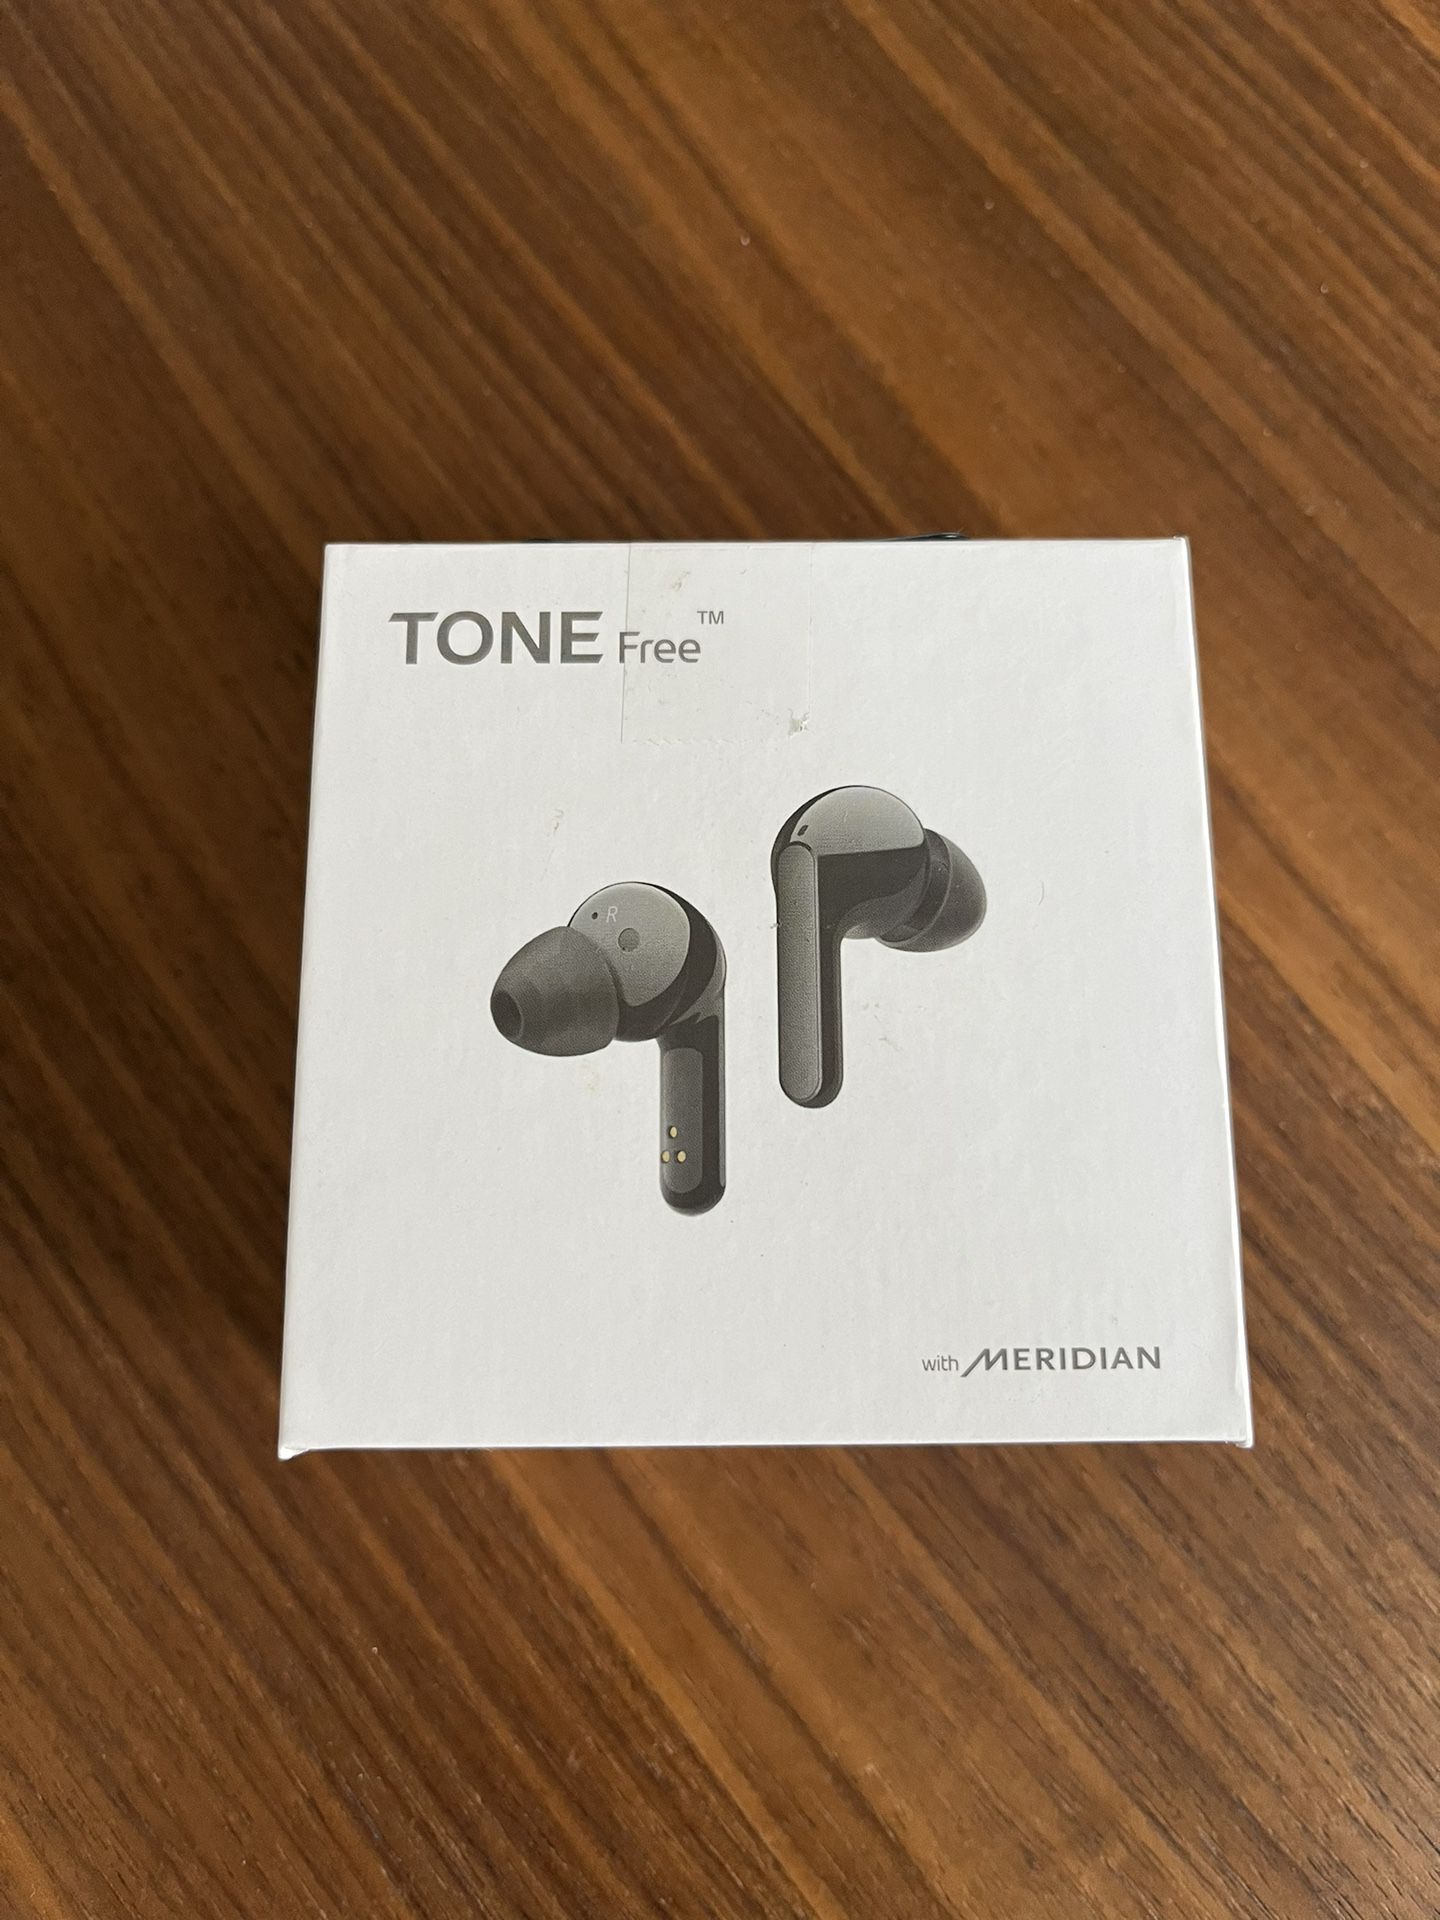 LG Tone Free Wireless Earbuds